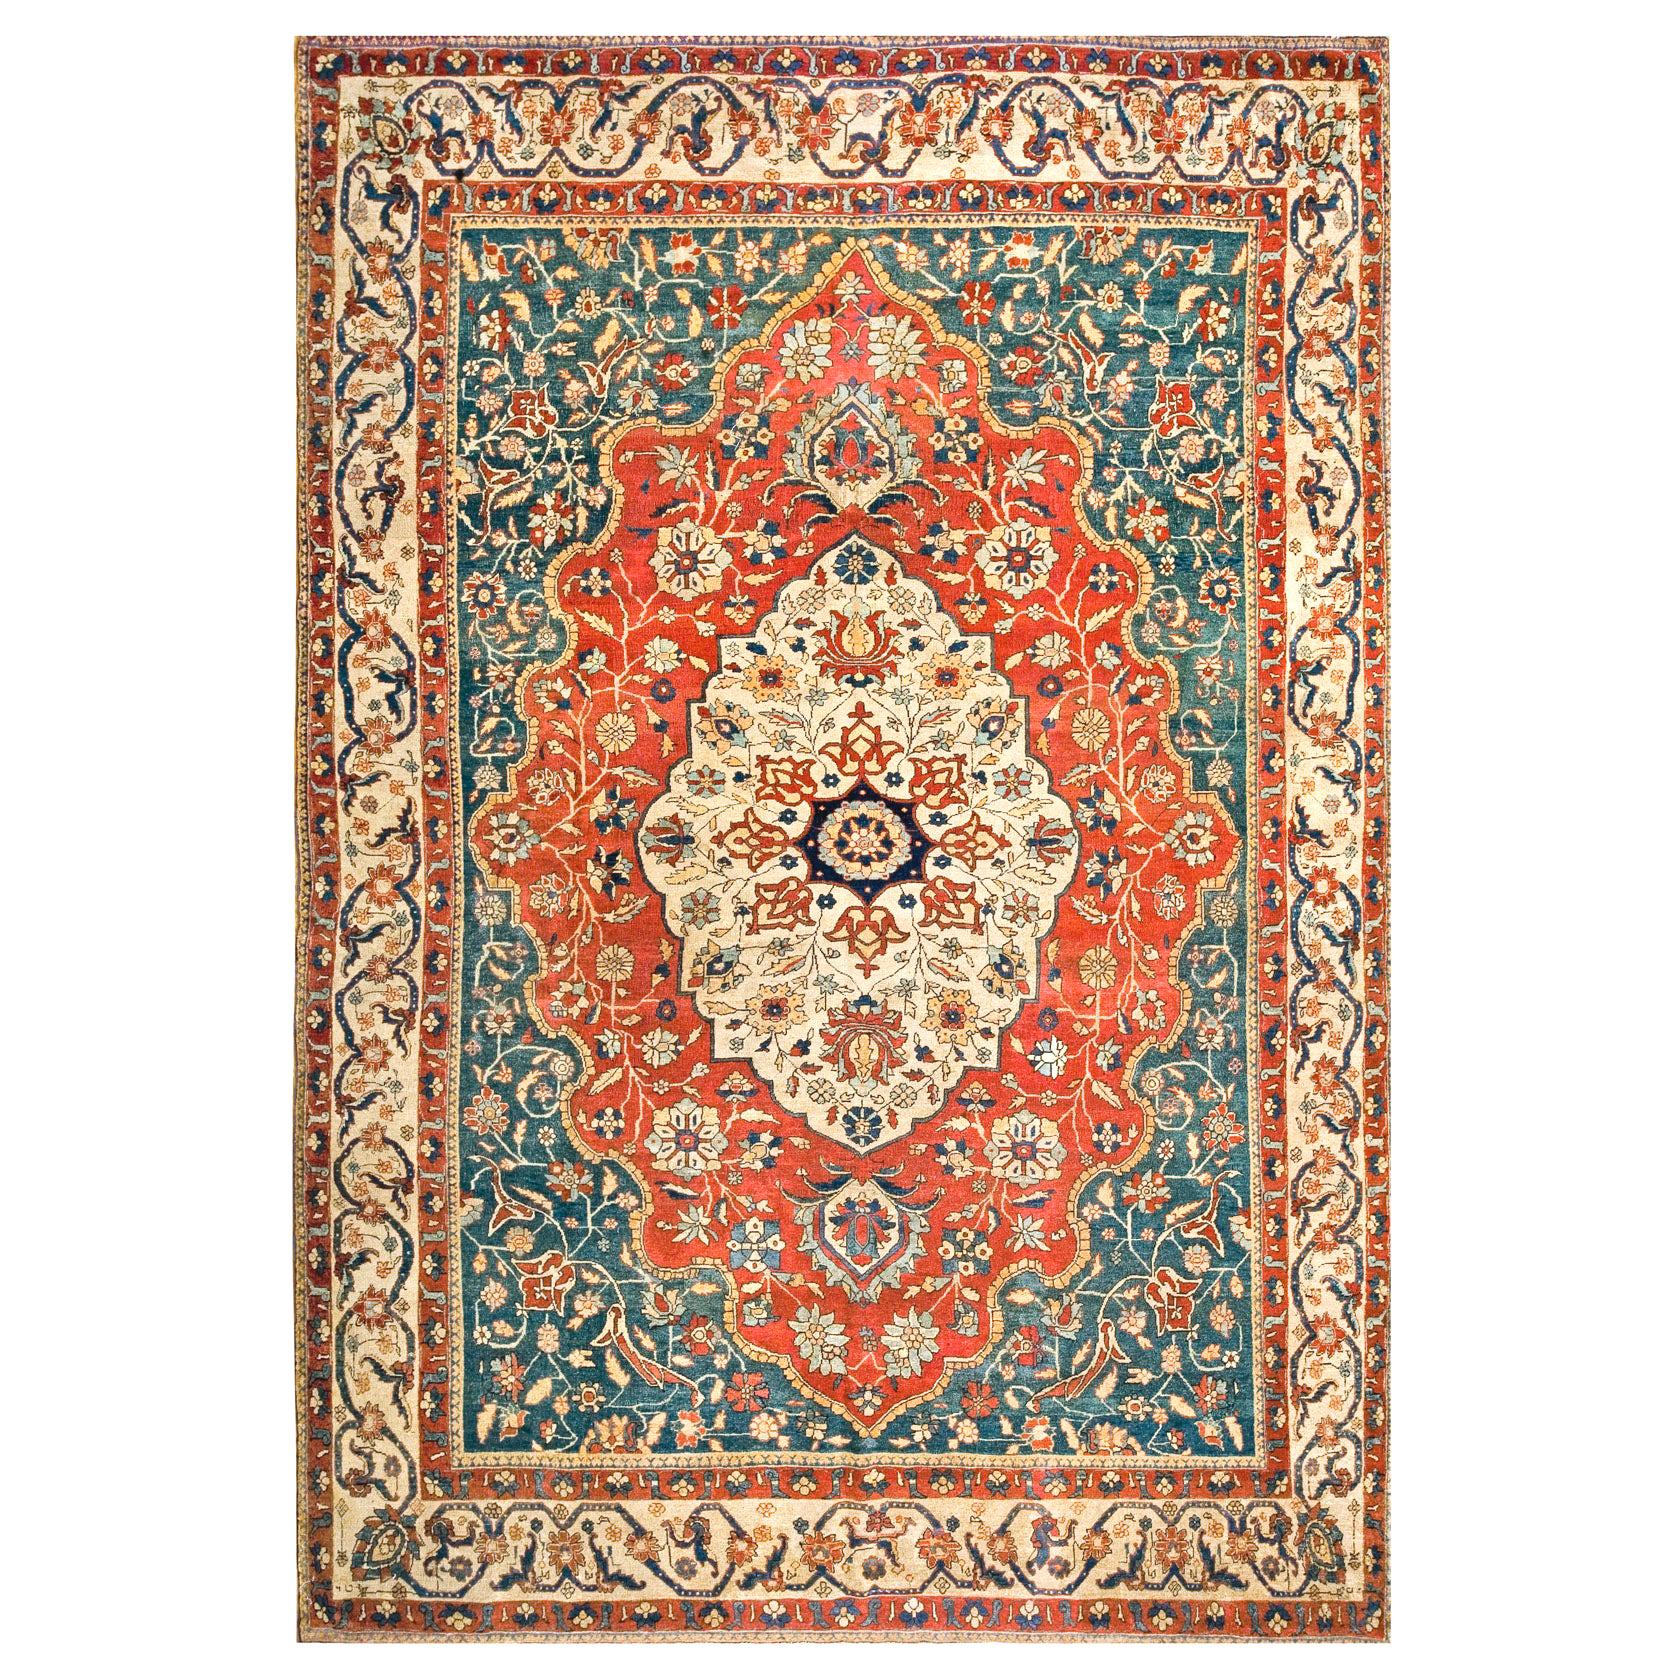 19th Century Persian Sarouk Farahan Carpet ( 7'2" x 10'6" - 218 x 320 cm ) For Sale